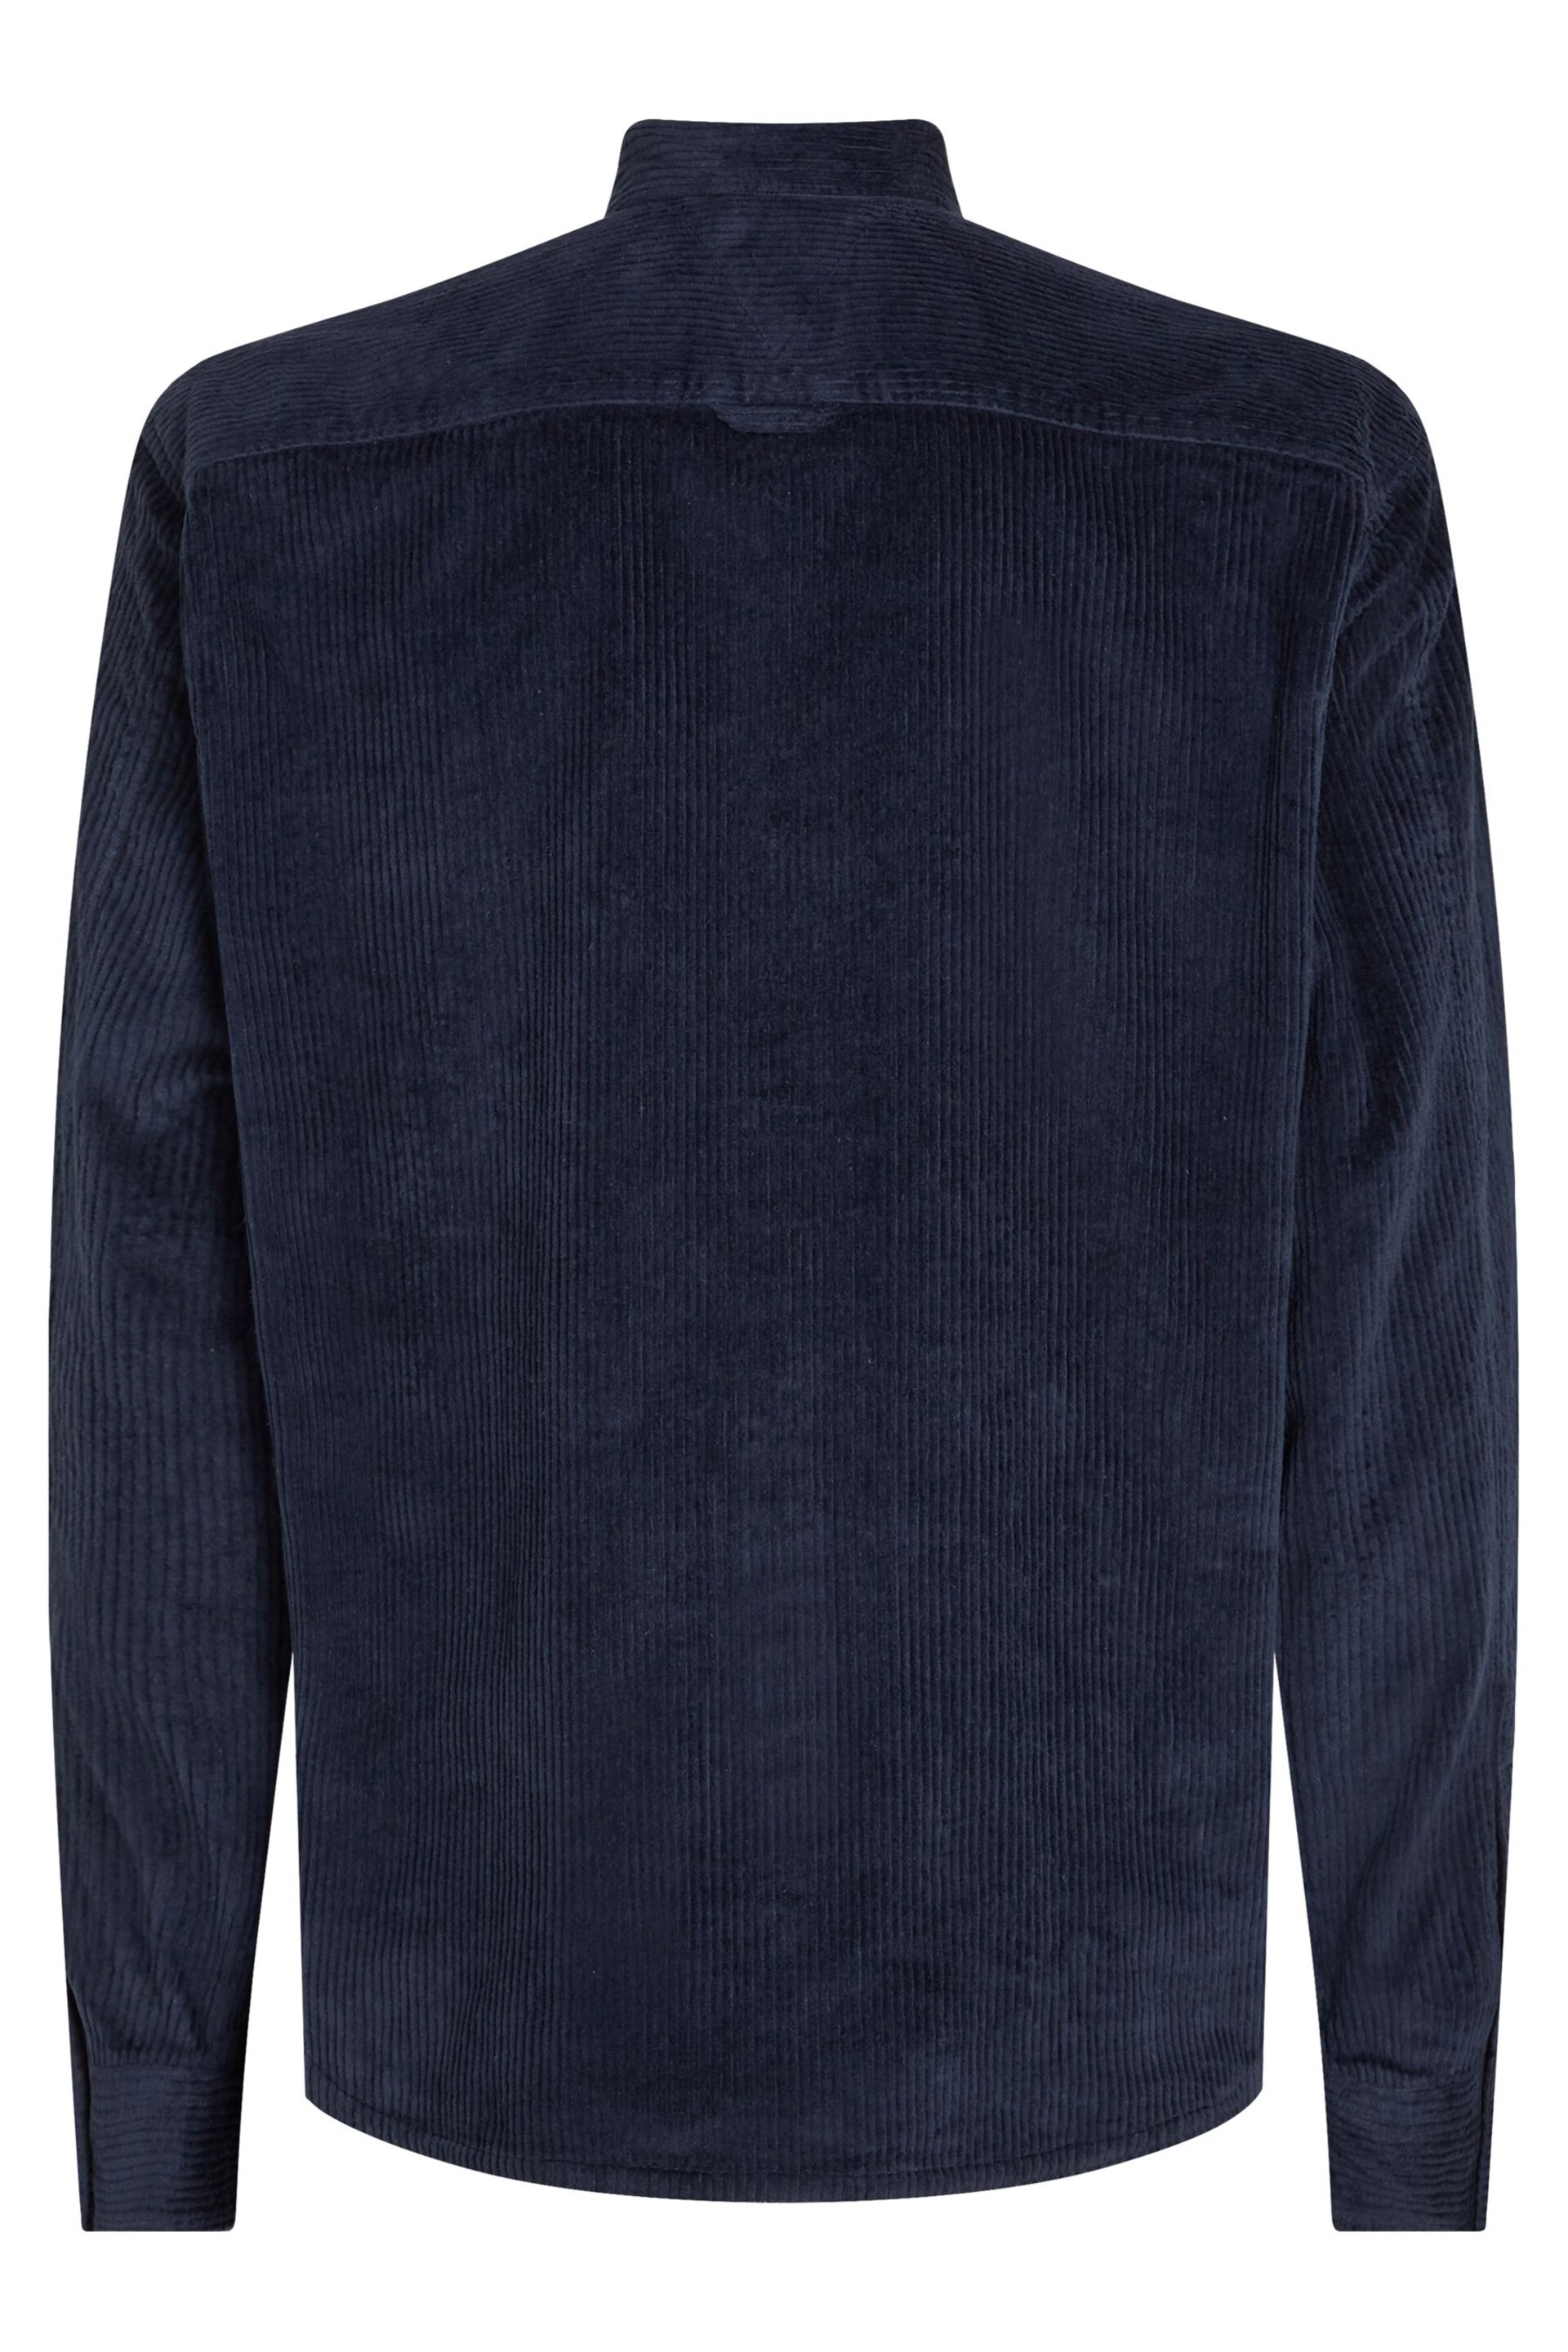 Tommy Hilfiger Blue Corduroy Solid Overshirt - Image 6 of 6